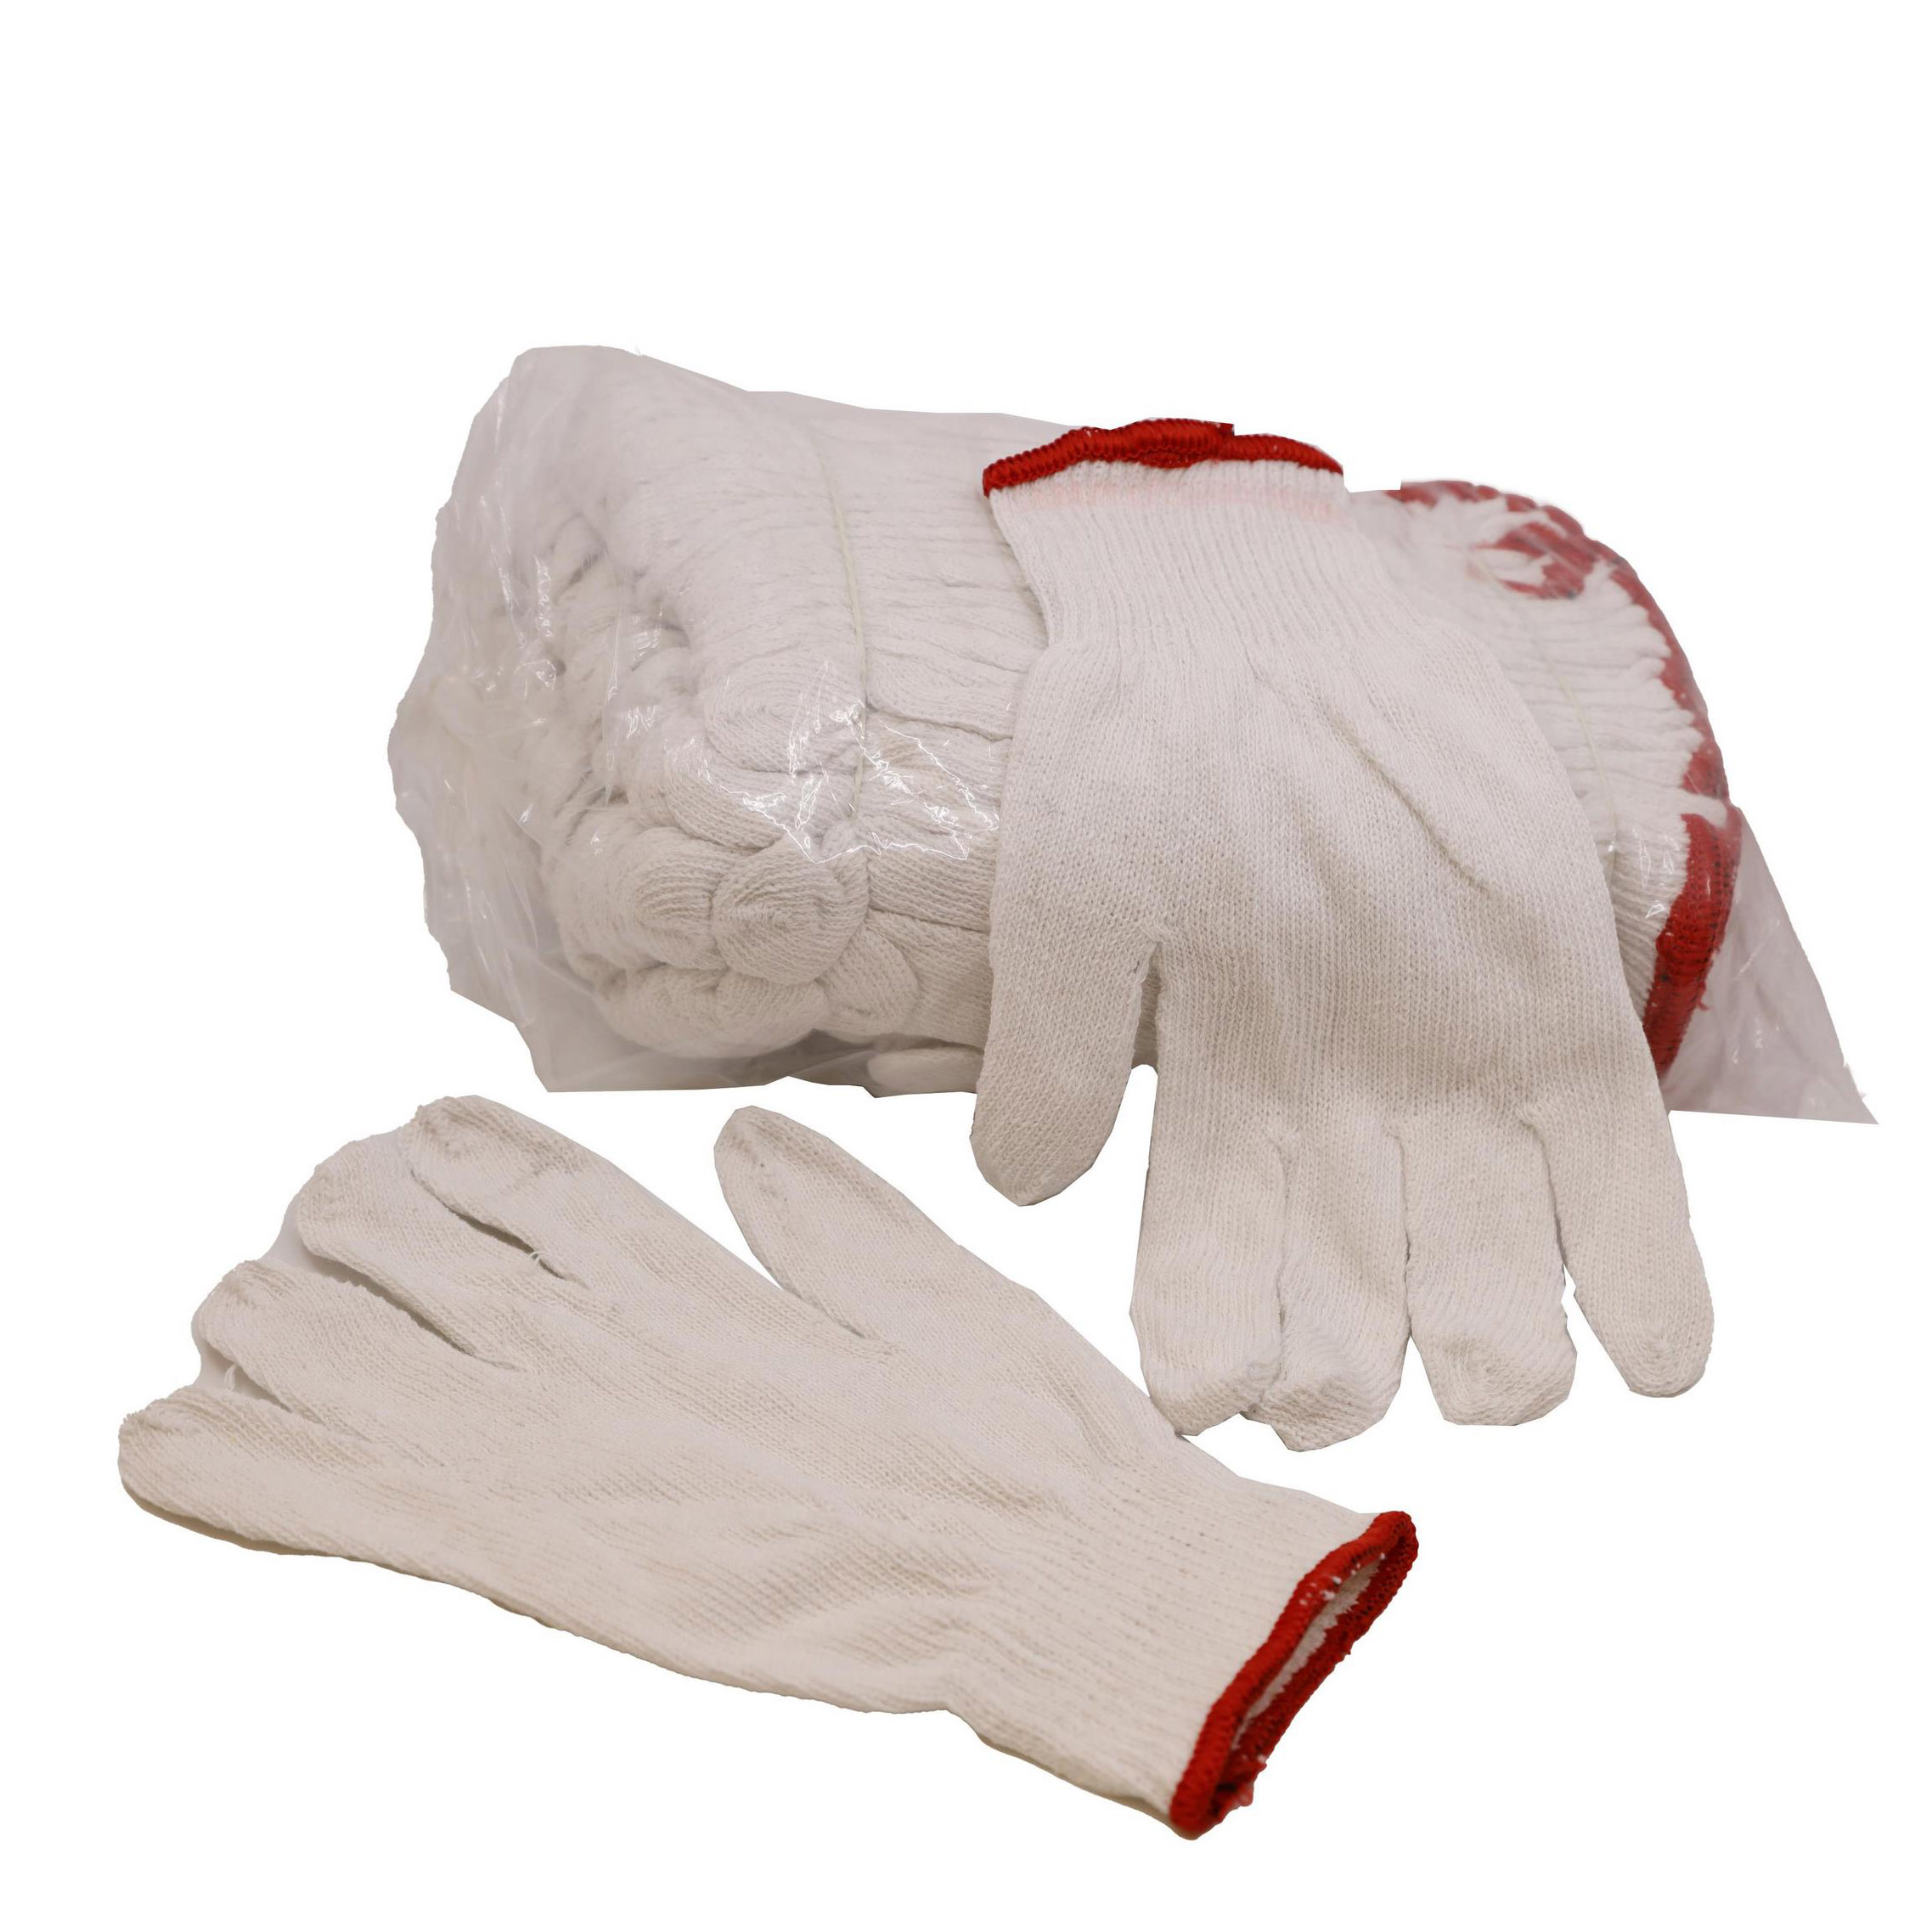 Buy Gloves-PC Online | Safety | Qetaat.com